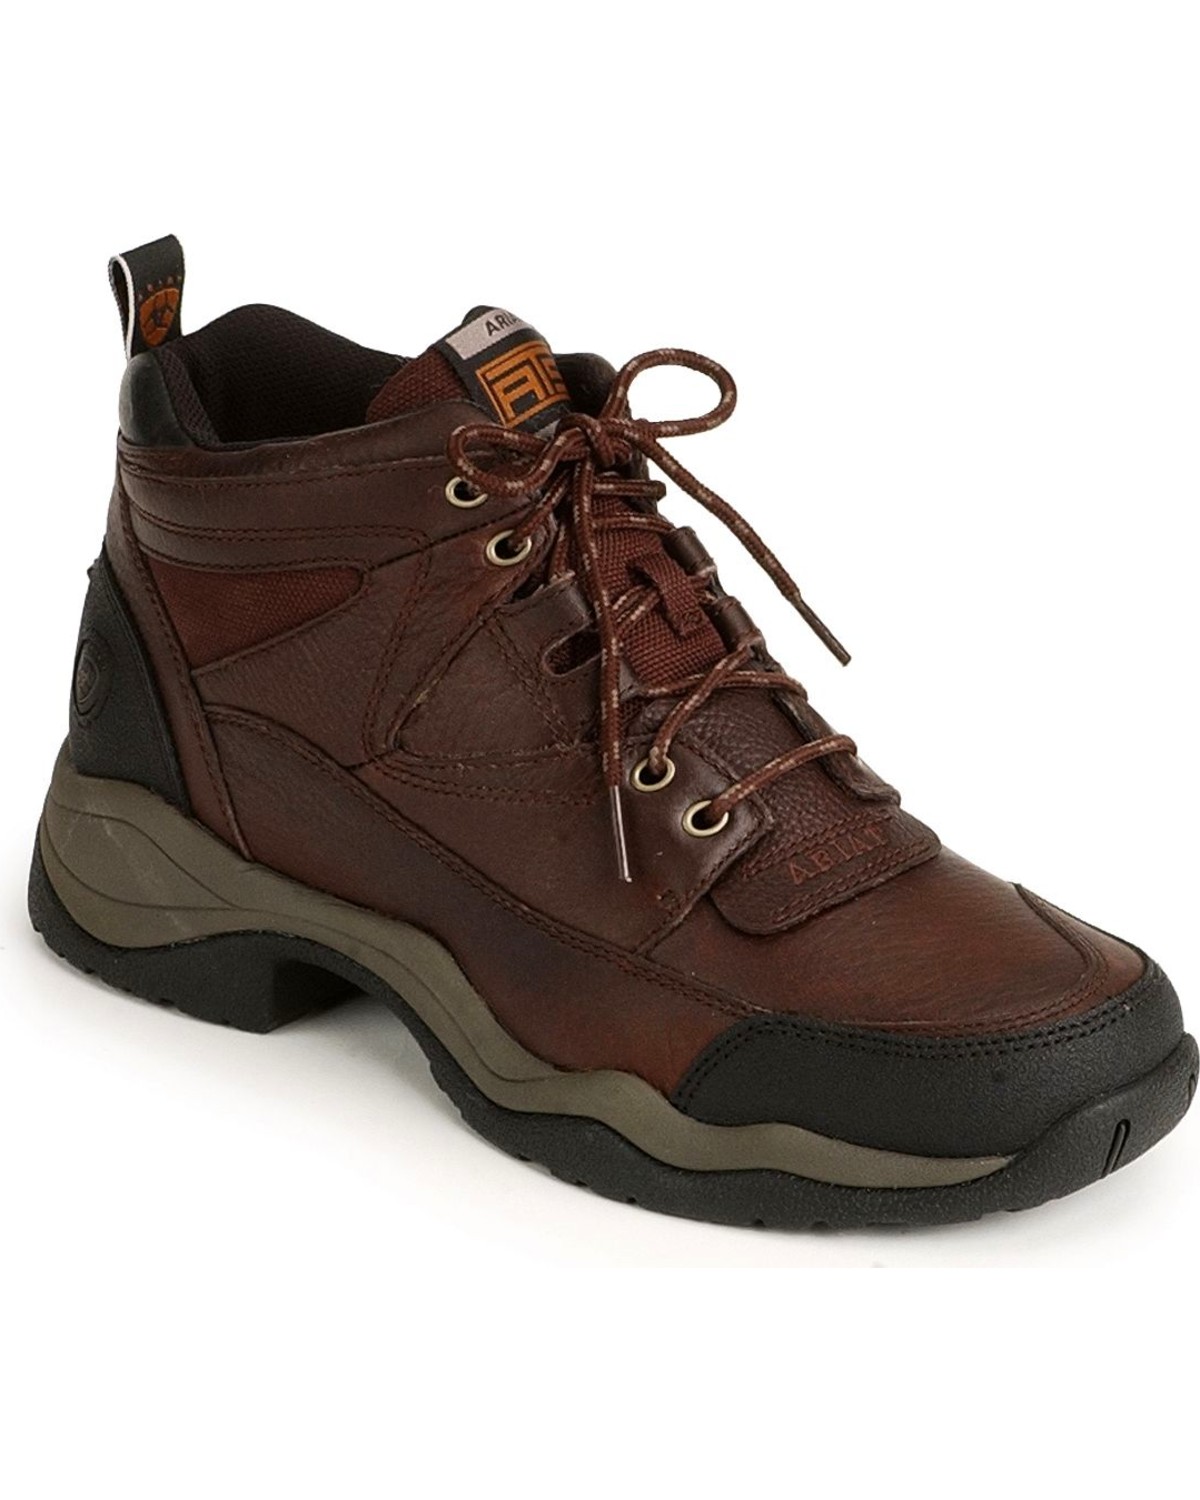 Ariat Men's Terrain Boots - Round Toe